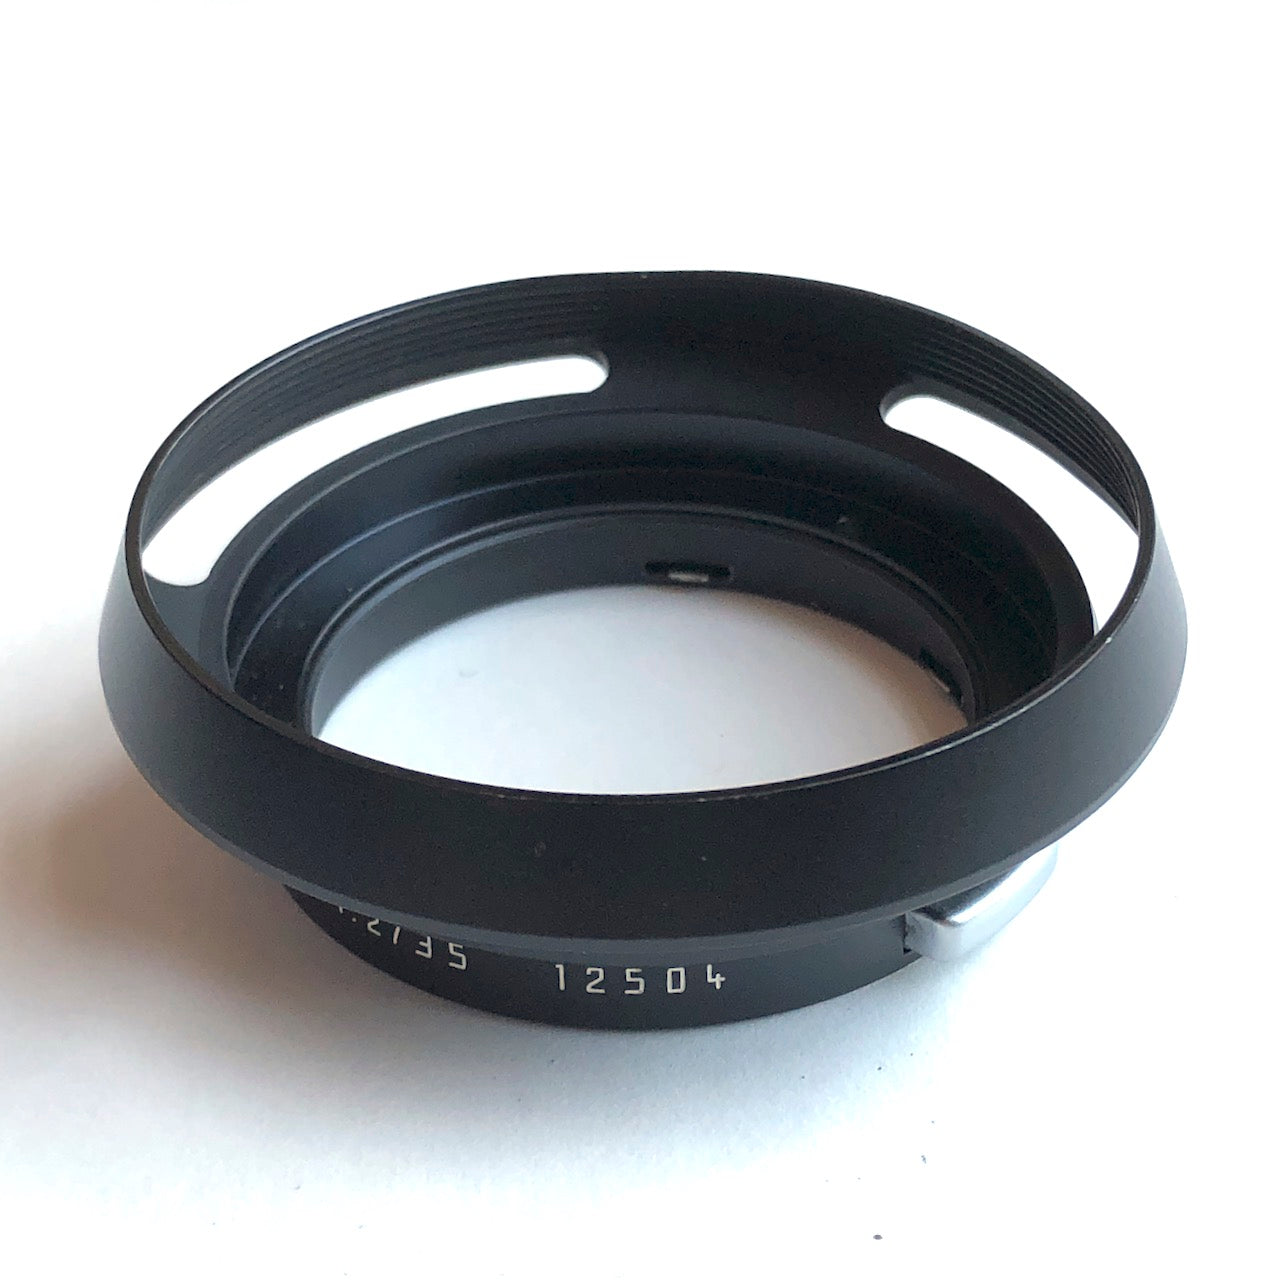 Leica 12504 lens hood